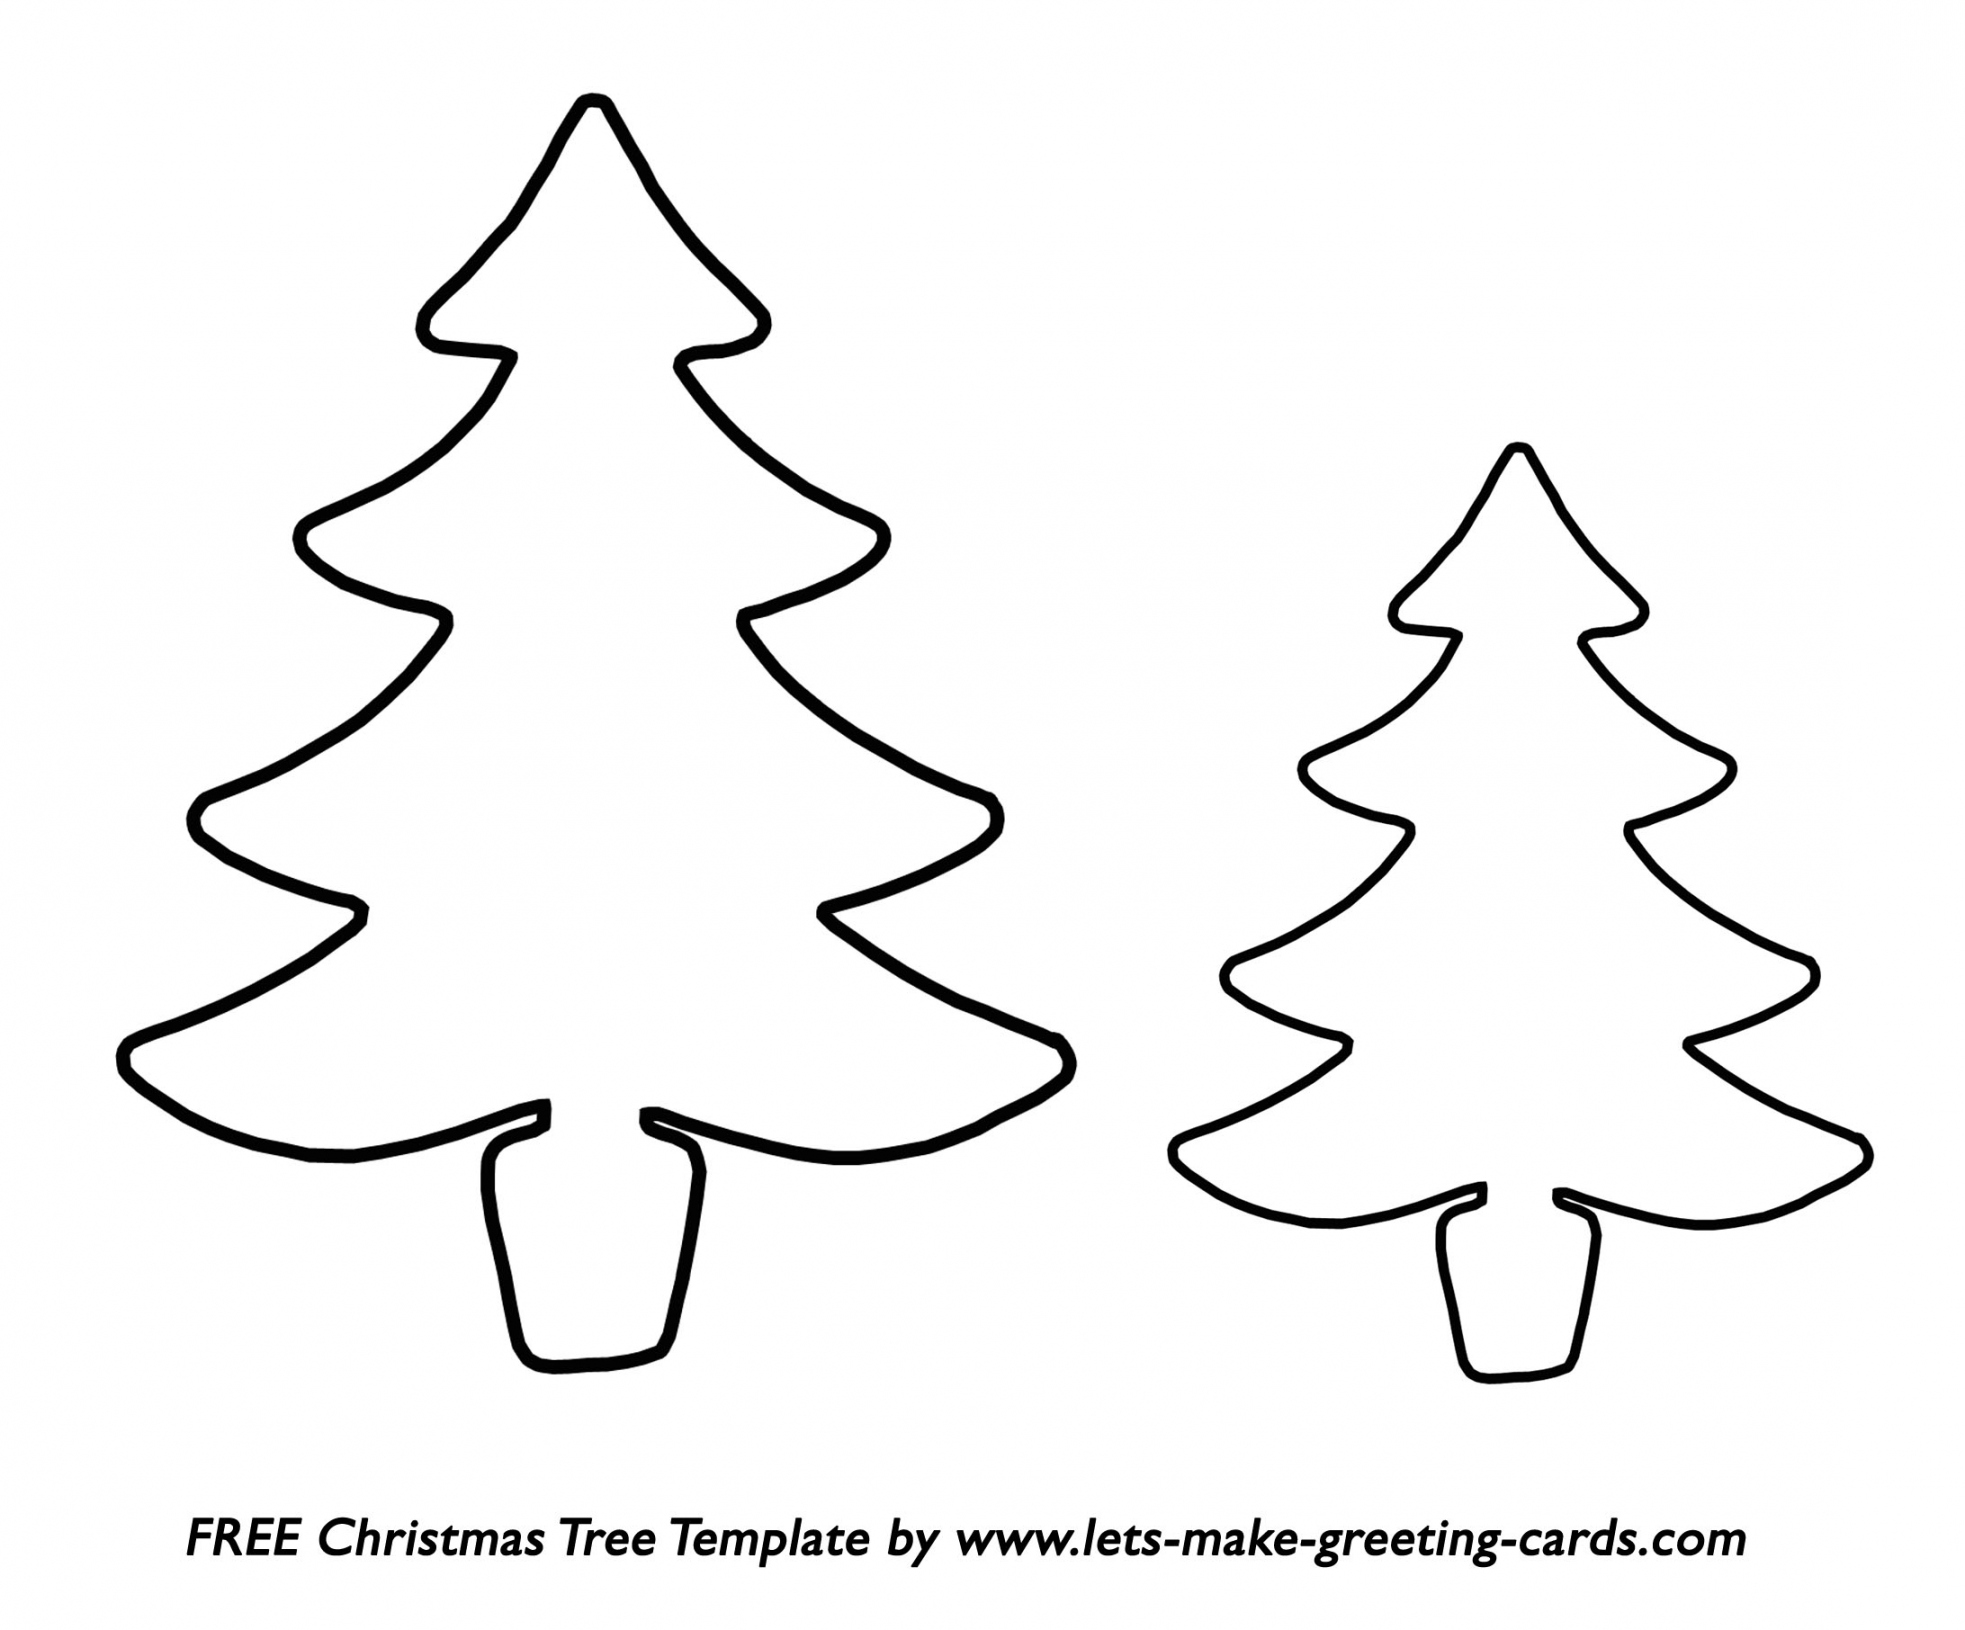 Free Christmas Tree Templates - FREE Printables - Free Christmas Tree Patterns